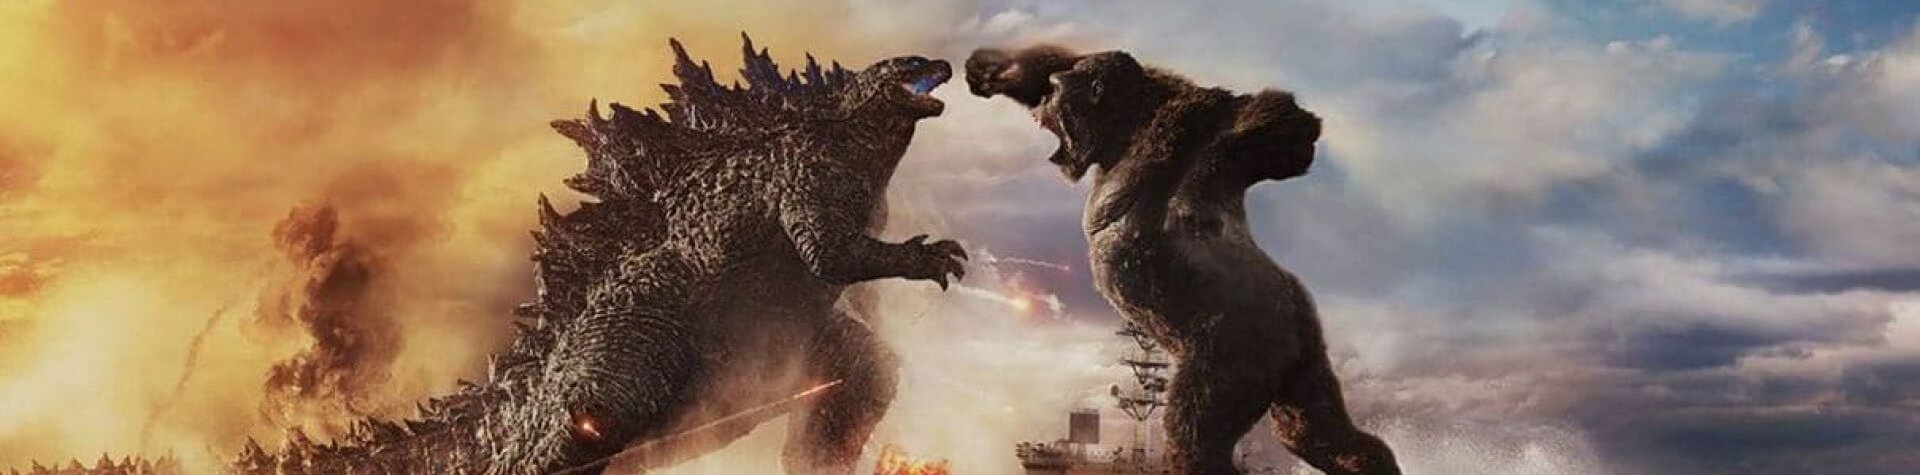 ‘Godzilla vs. Kong’: quase 90 anos de porradaria e crítica social